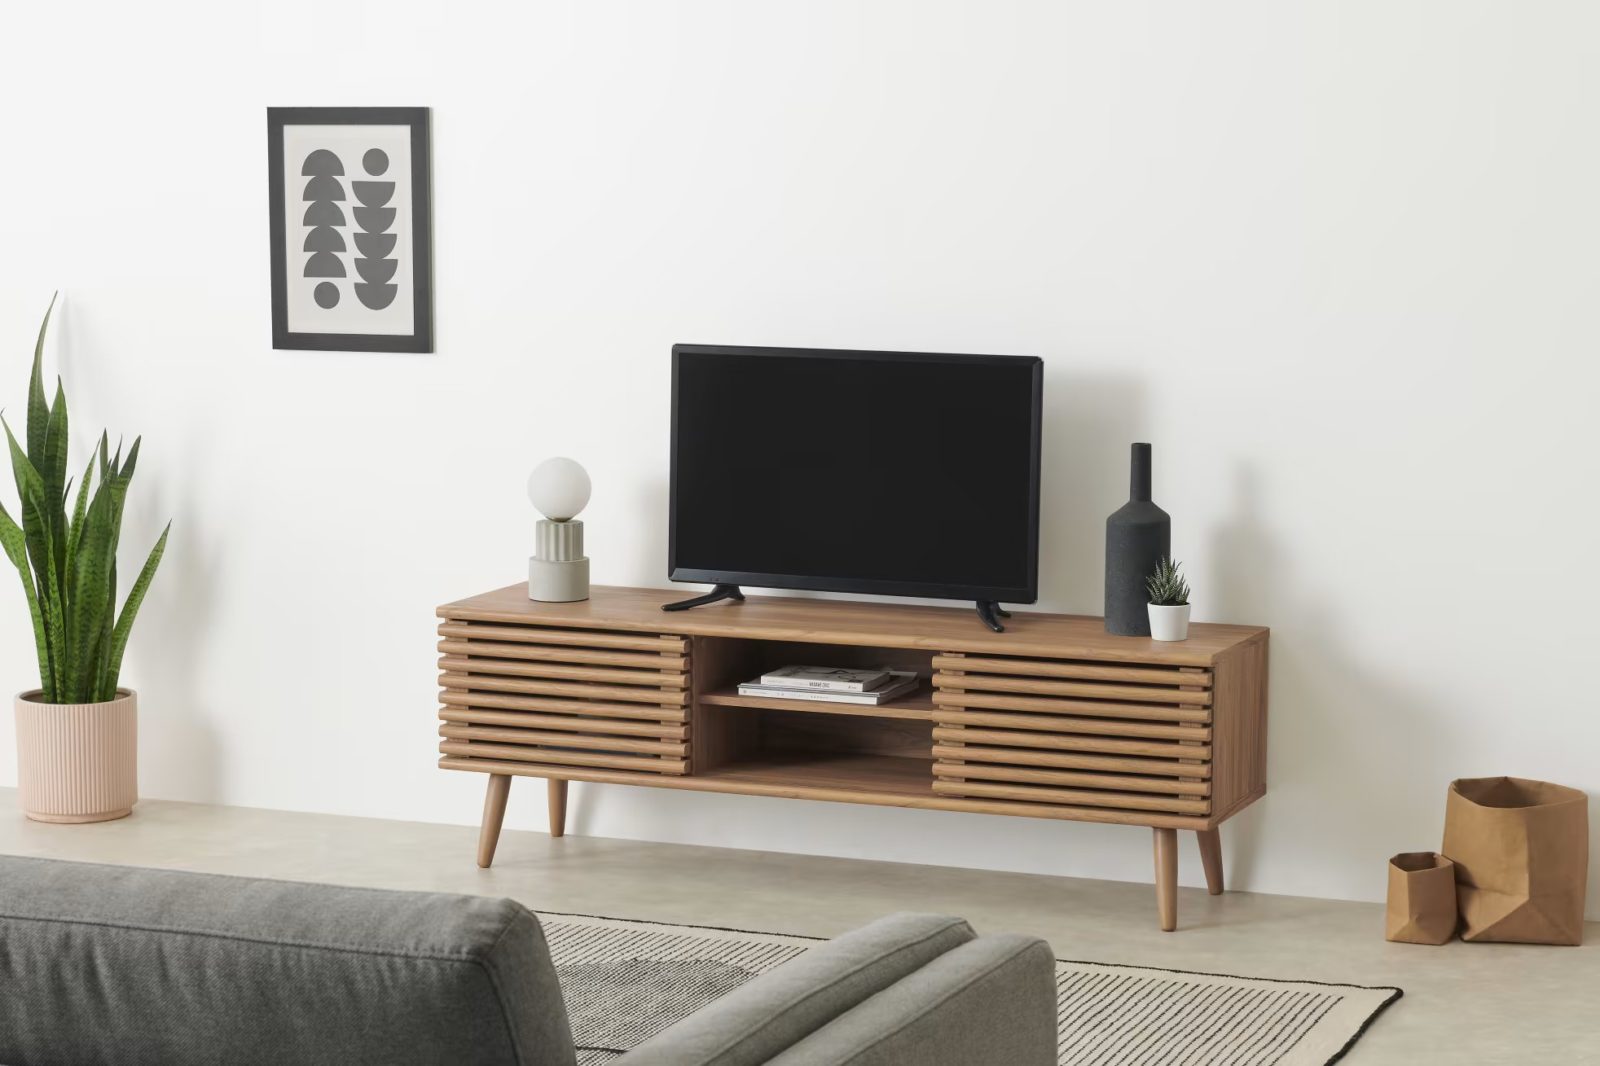 meubles-tv-bois-design-tendance